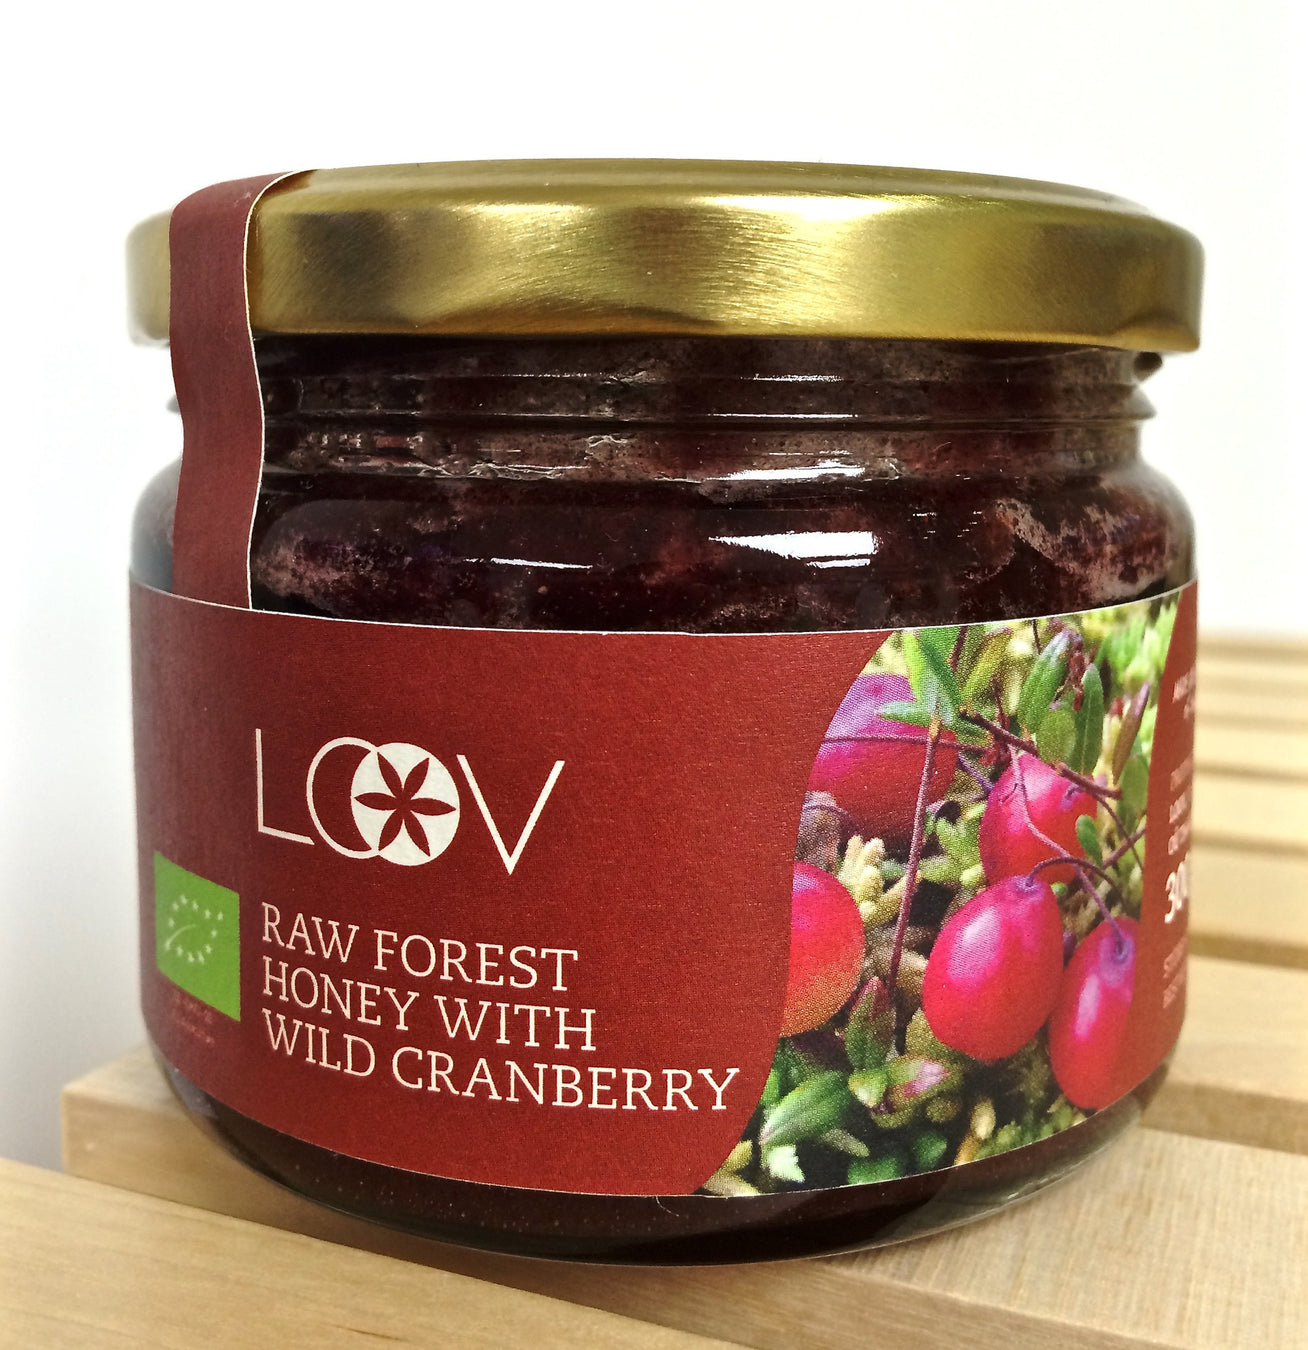 Loov 有機小紅莓粉原生蜂蜜 Organic Raw Forest Honey with Wild Cranberry (300g)